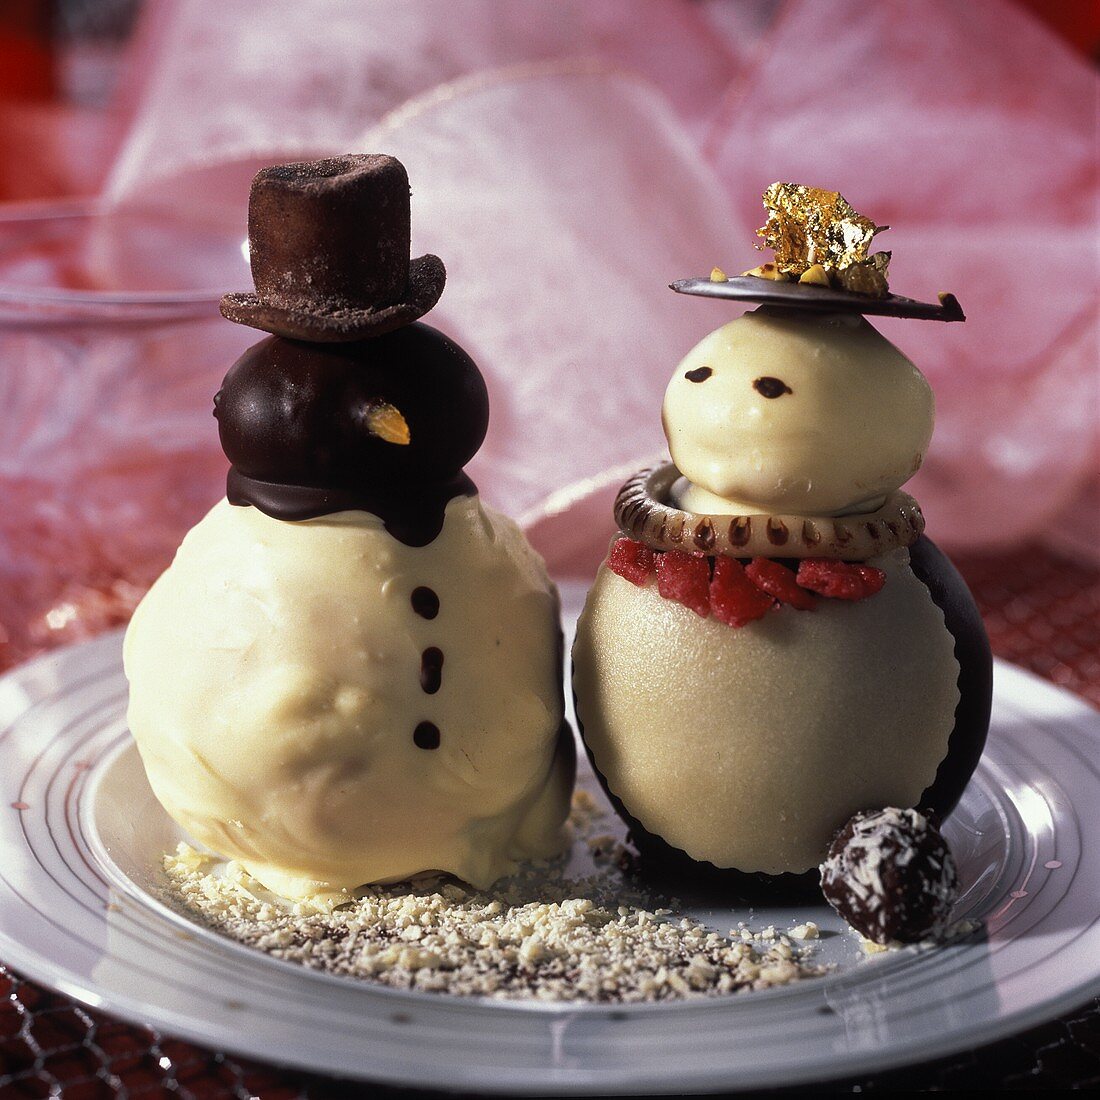 White and dark chocolate snowmen as dessert